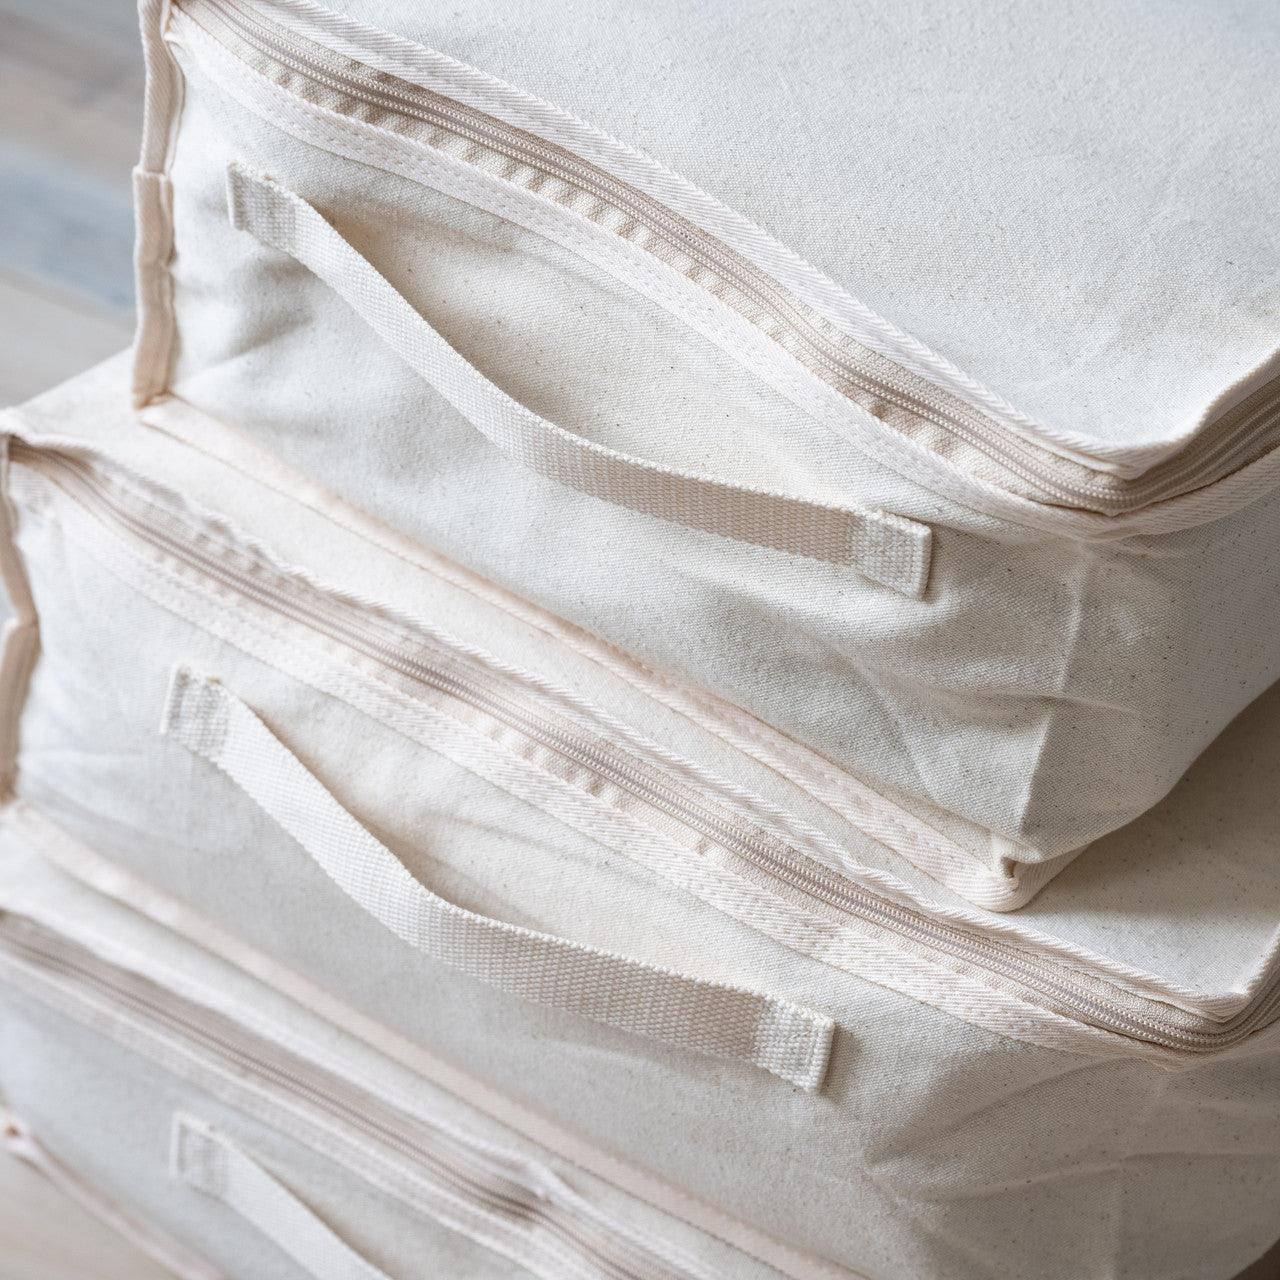 Cotton Storage Bags - 10oz Thick Pure Cotton Fabric  - 6 Pack - (Small X 2 + Medium X 2 + Large X 2) - Hangersforless